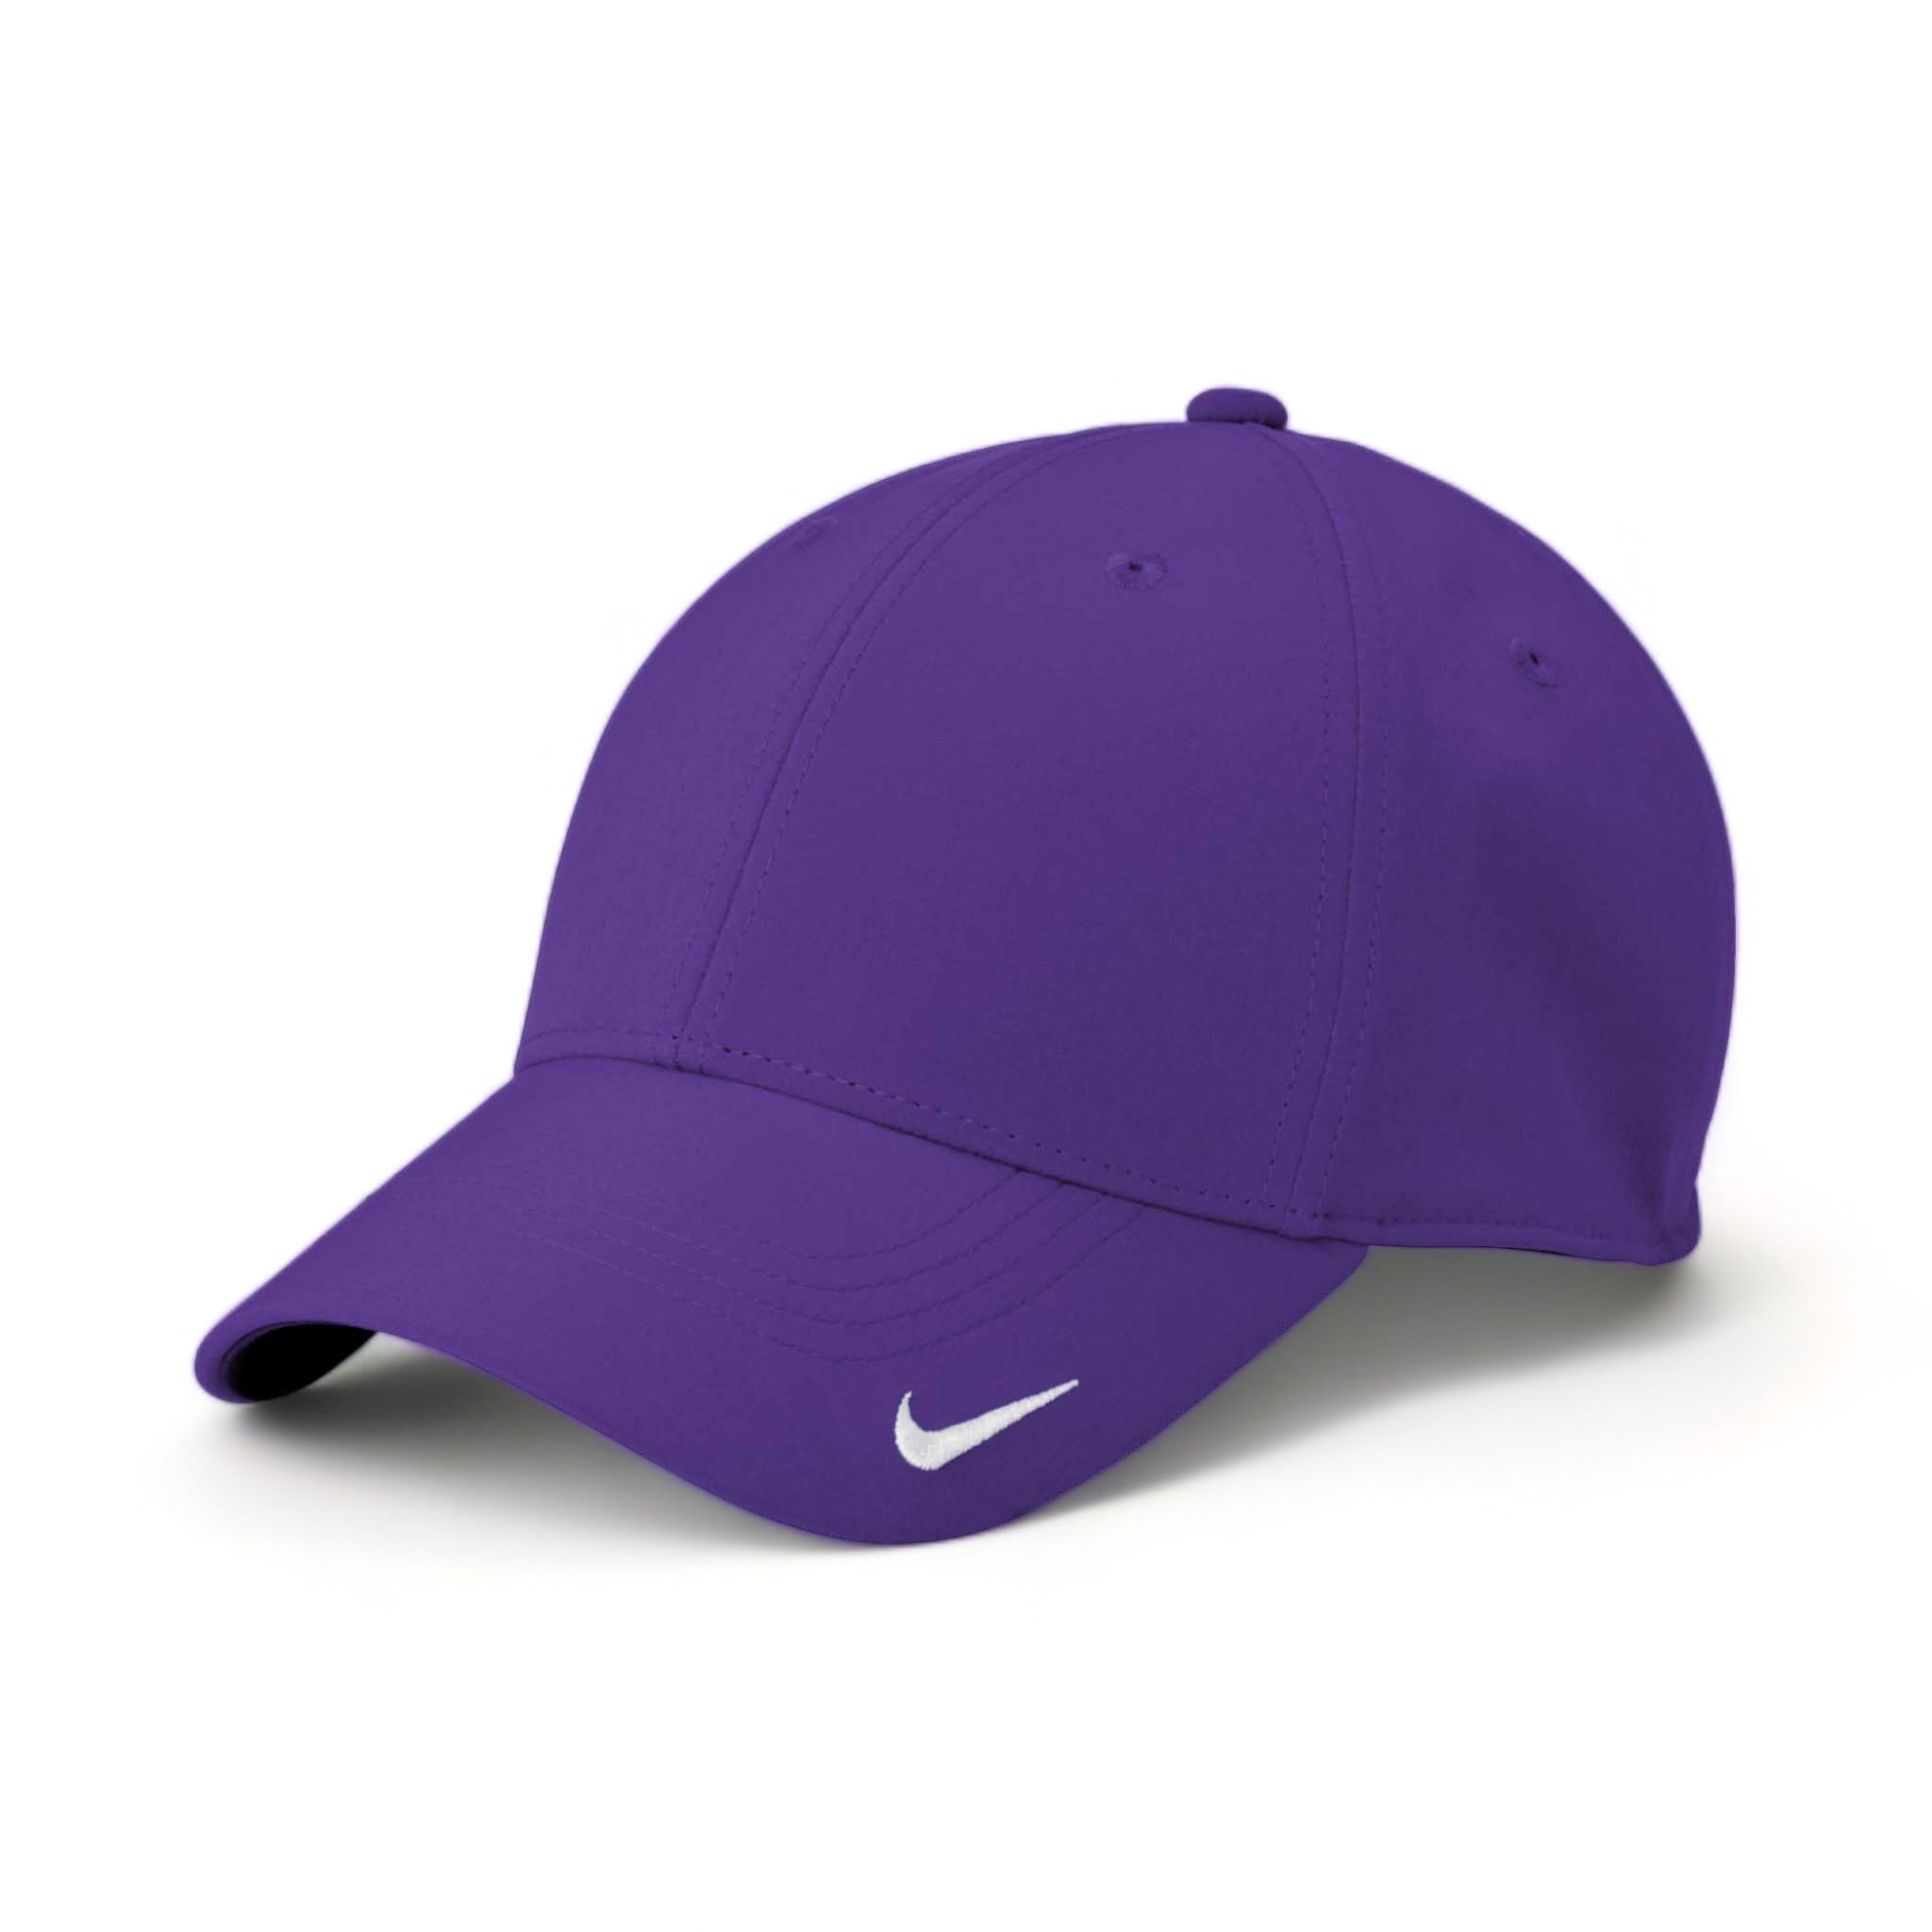 Side view of Nike NKFB6447 custom hat in court purple